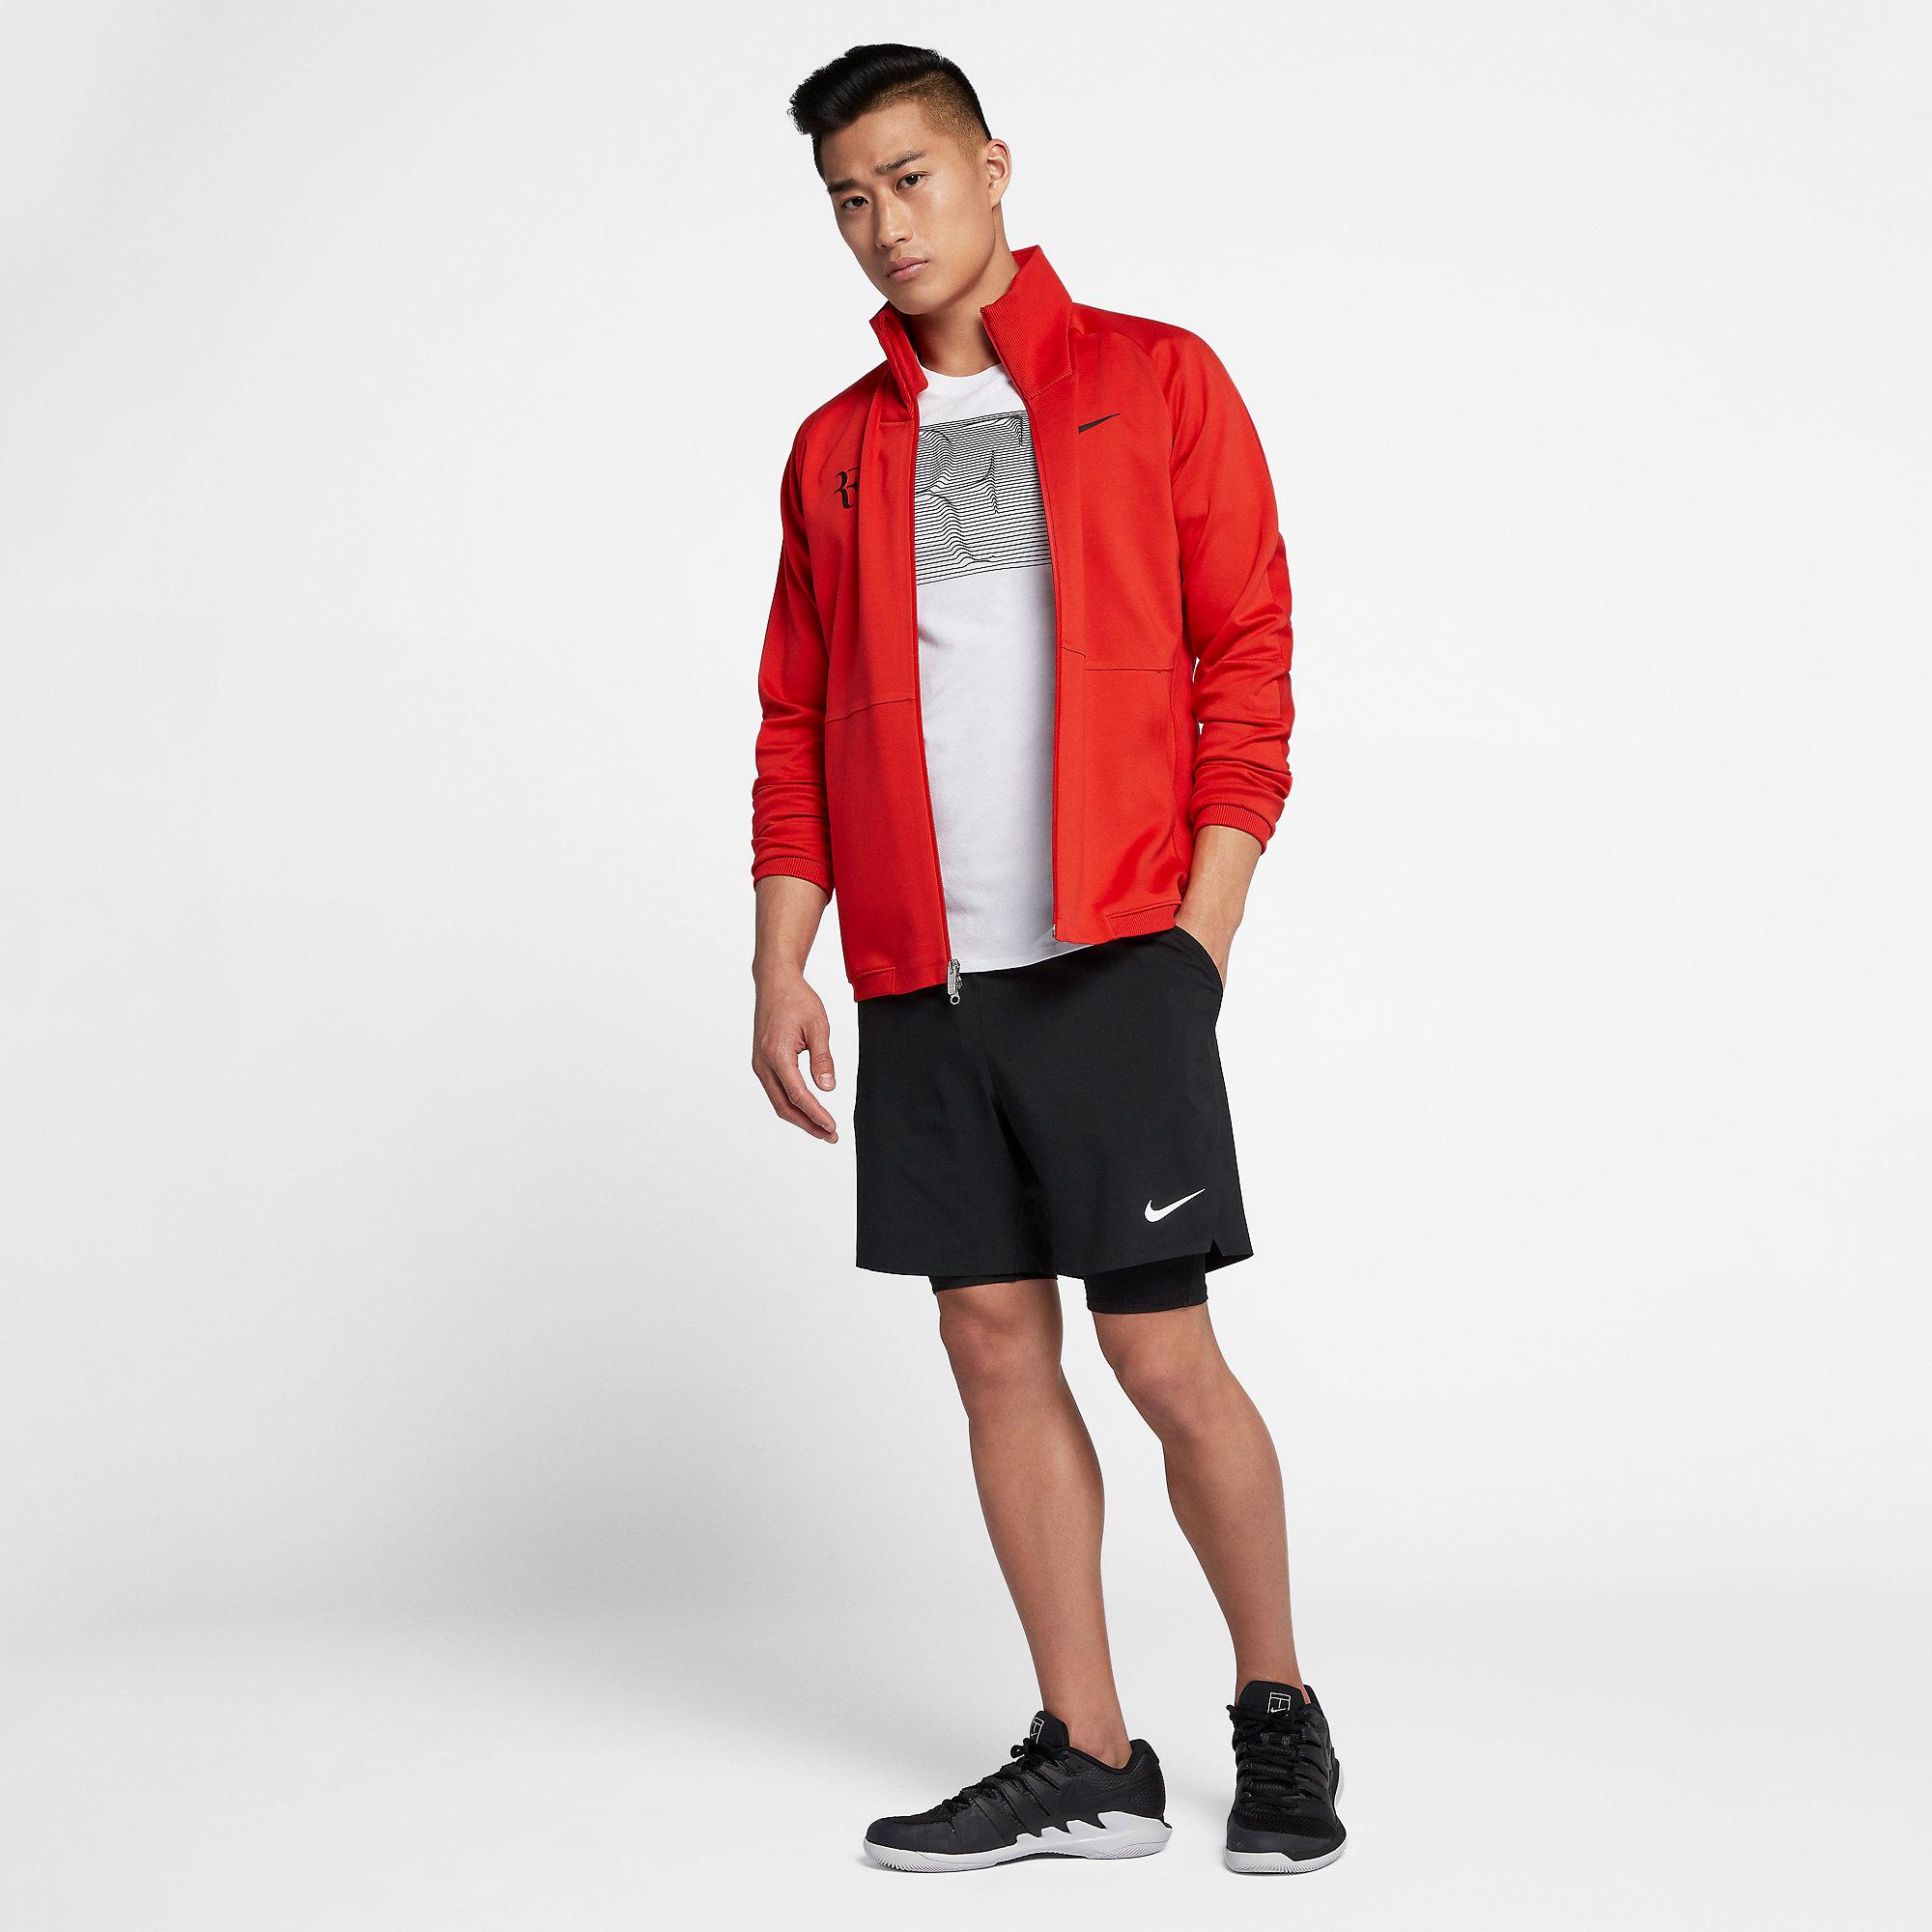 Nike Mens RF Tennis Jacket - Habanero Red - Tennisnuts.com